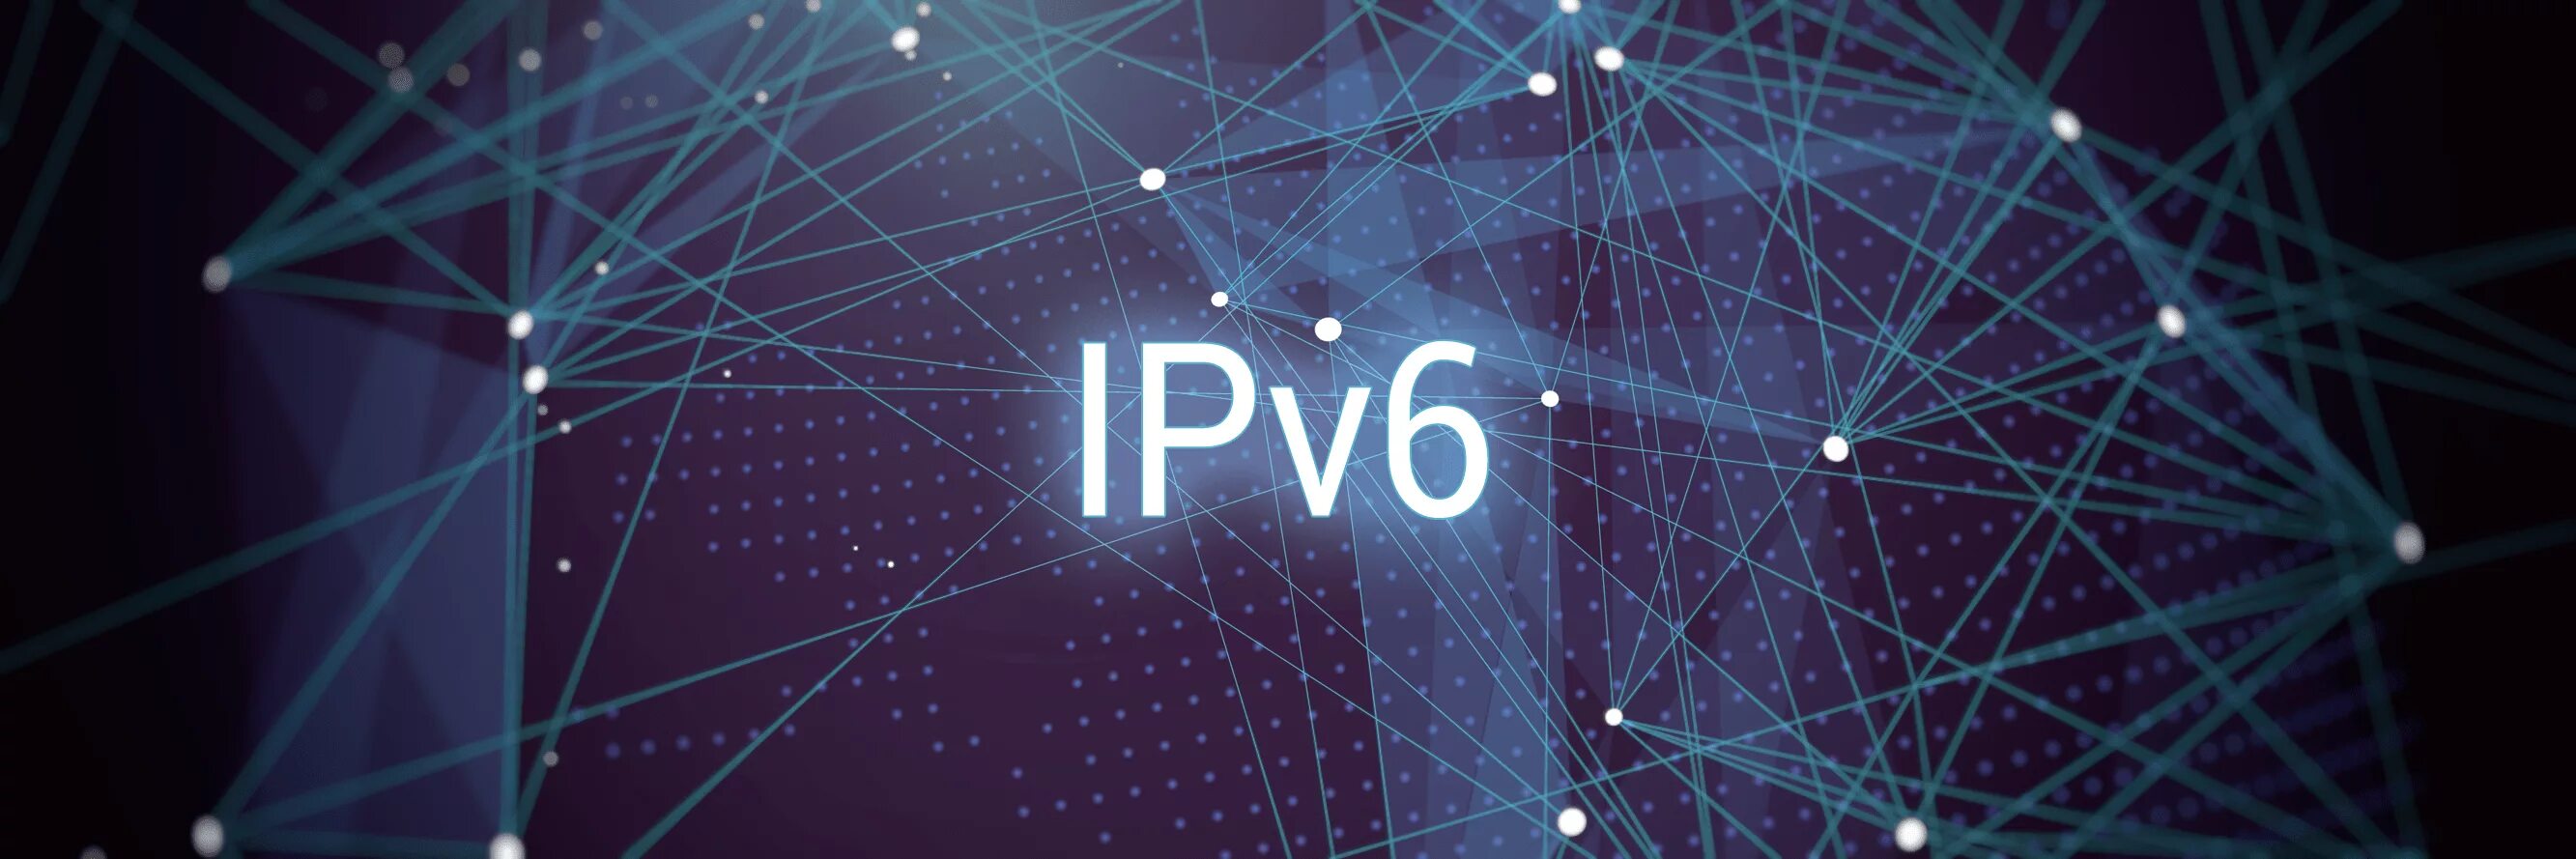 IP V 6. Ipv6 фото. 6g связь. Ipv 6